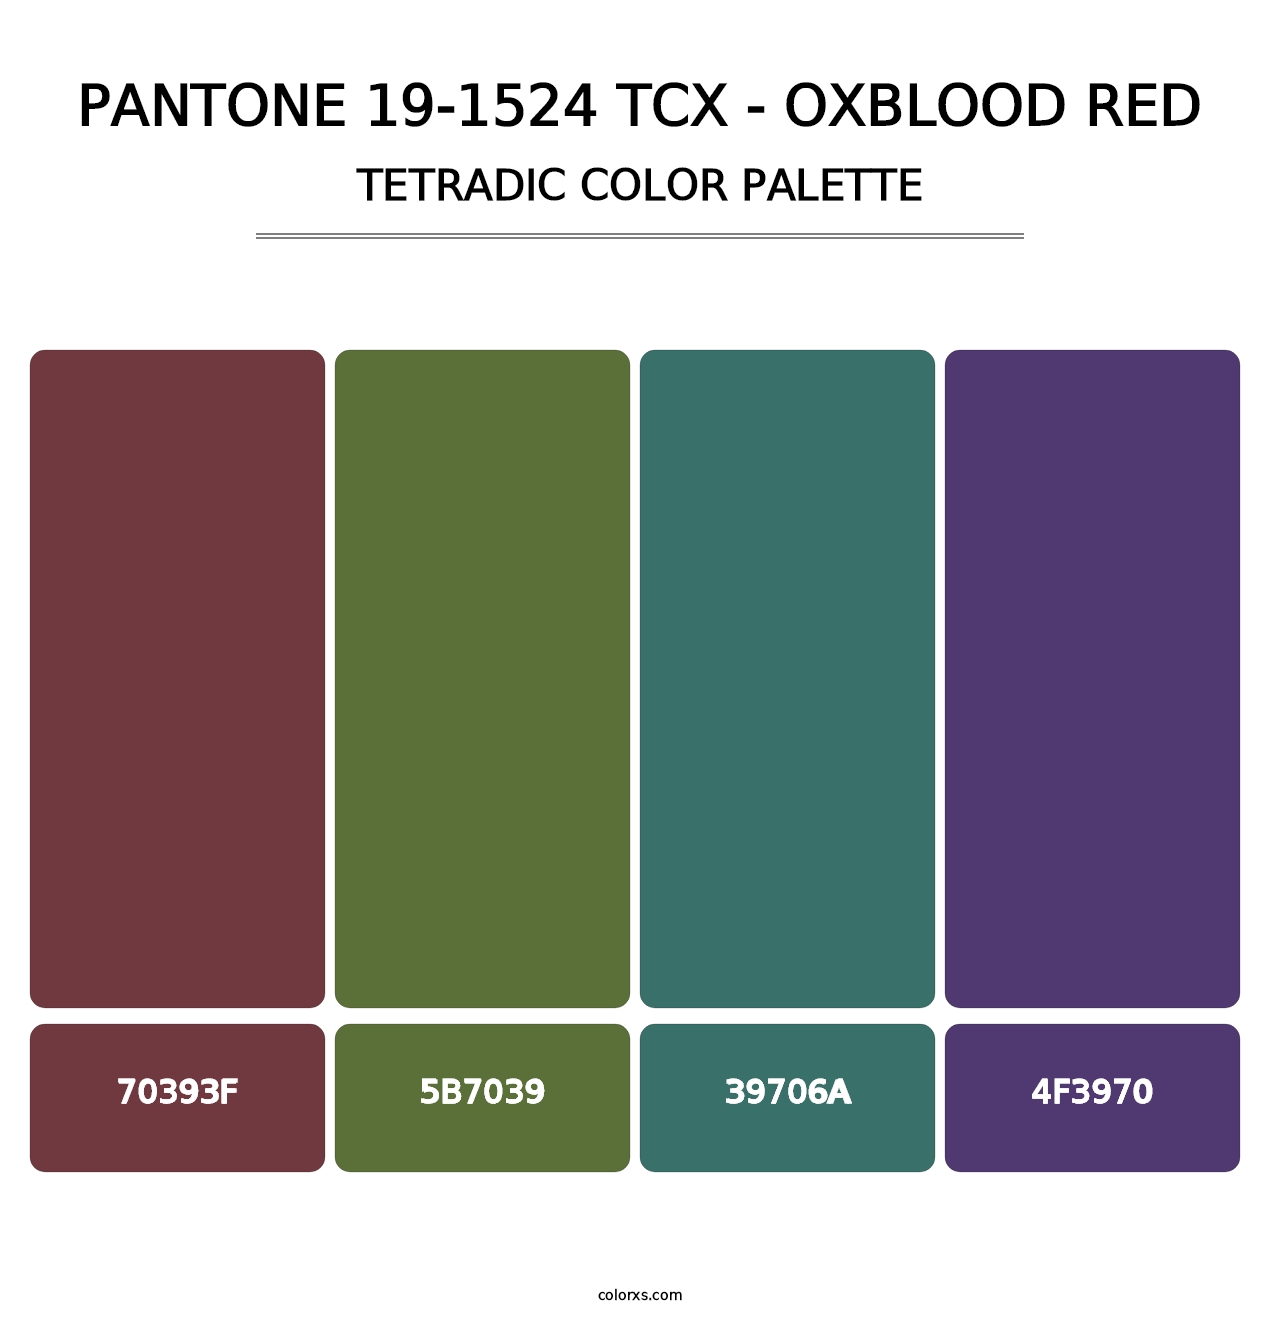 PANTONE 19-1524 TCX - Oxblood Red - Tetradic Color Palette